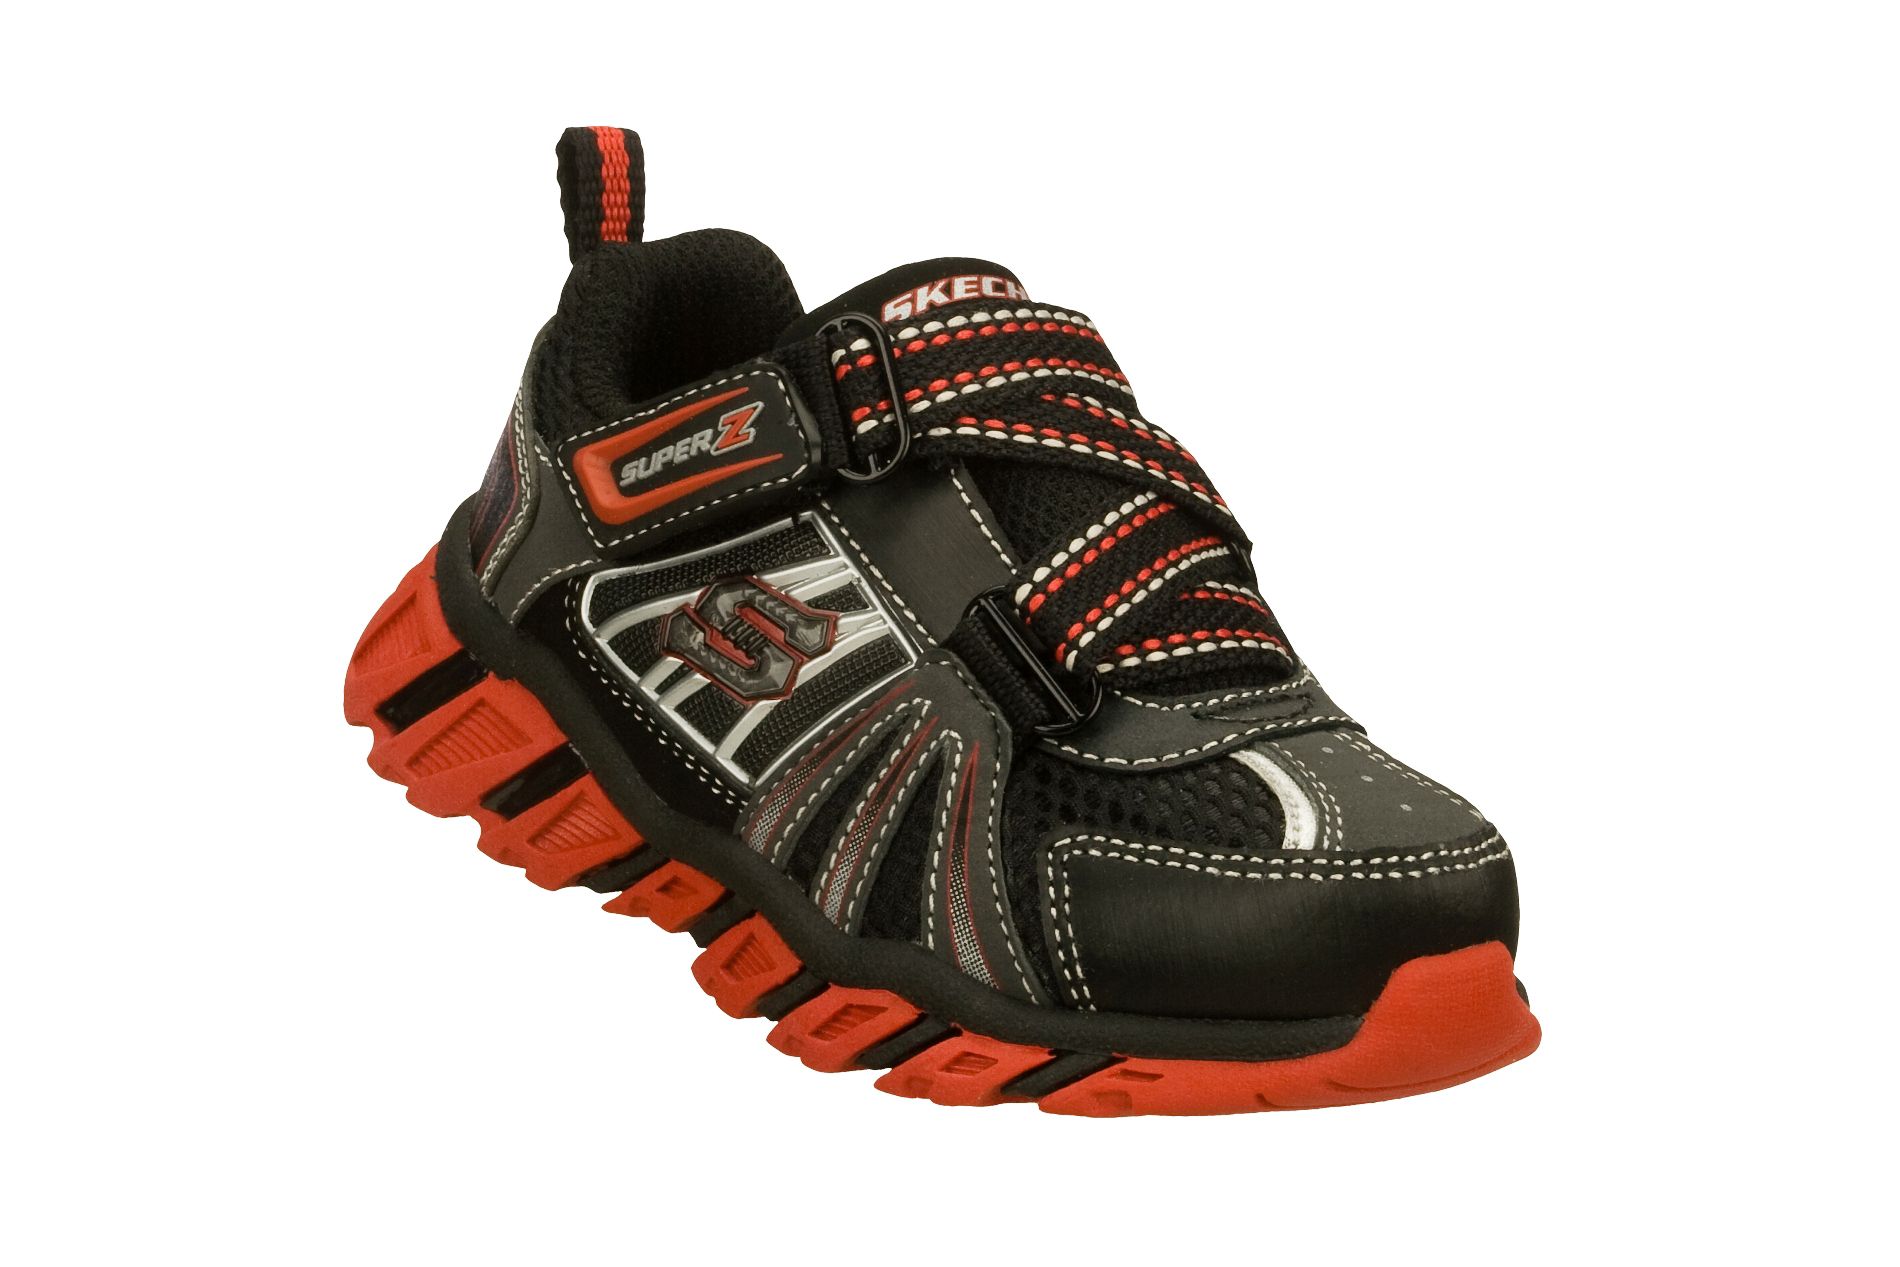 Skechers Toddler Boy's S Lights Pillar Ignus Athletic Shoe - Black/Red